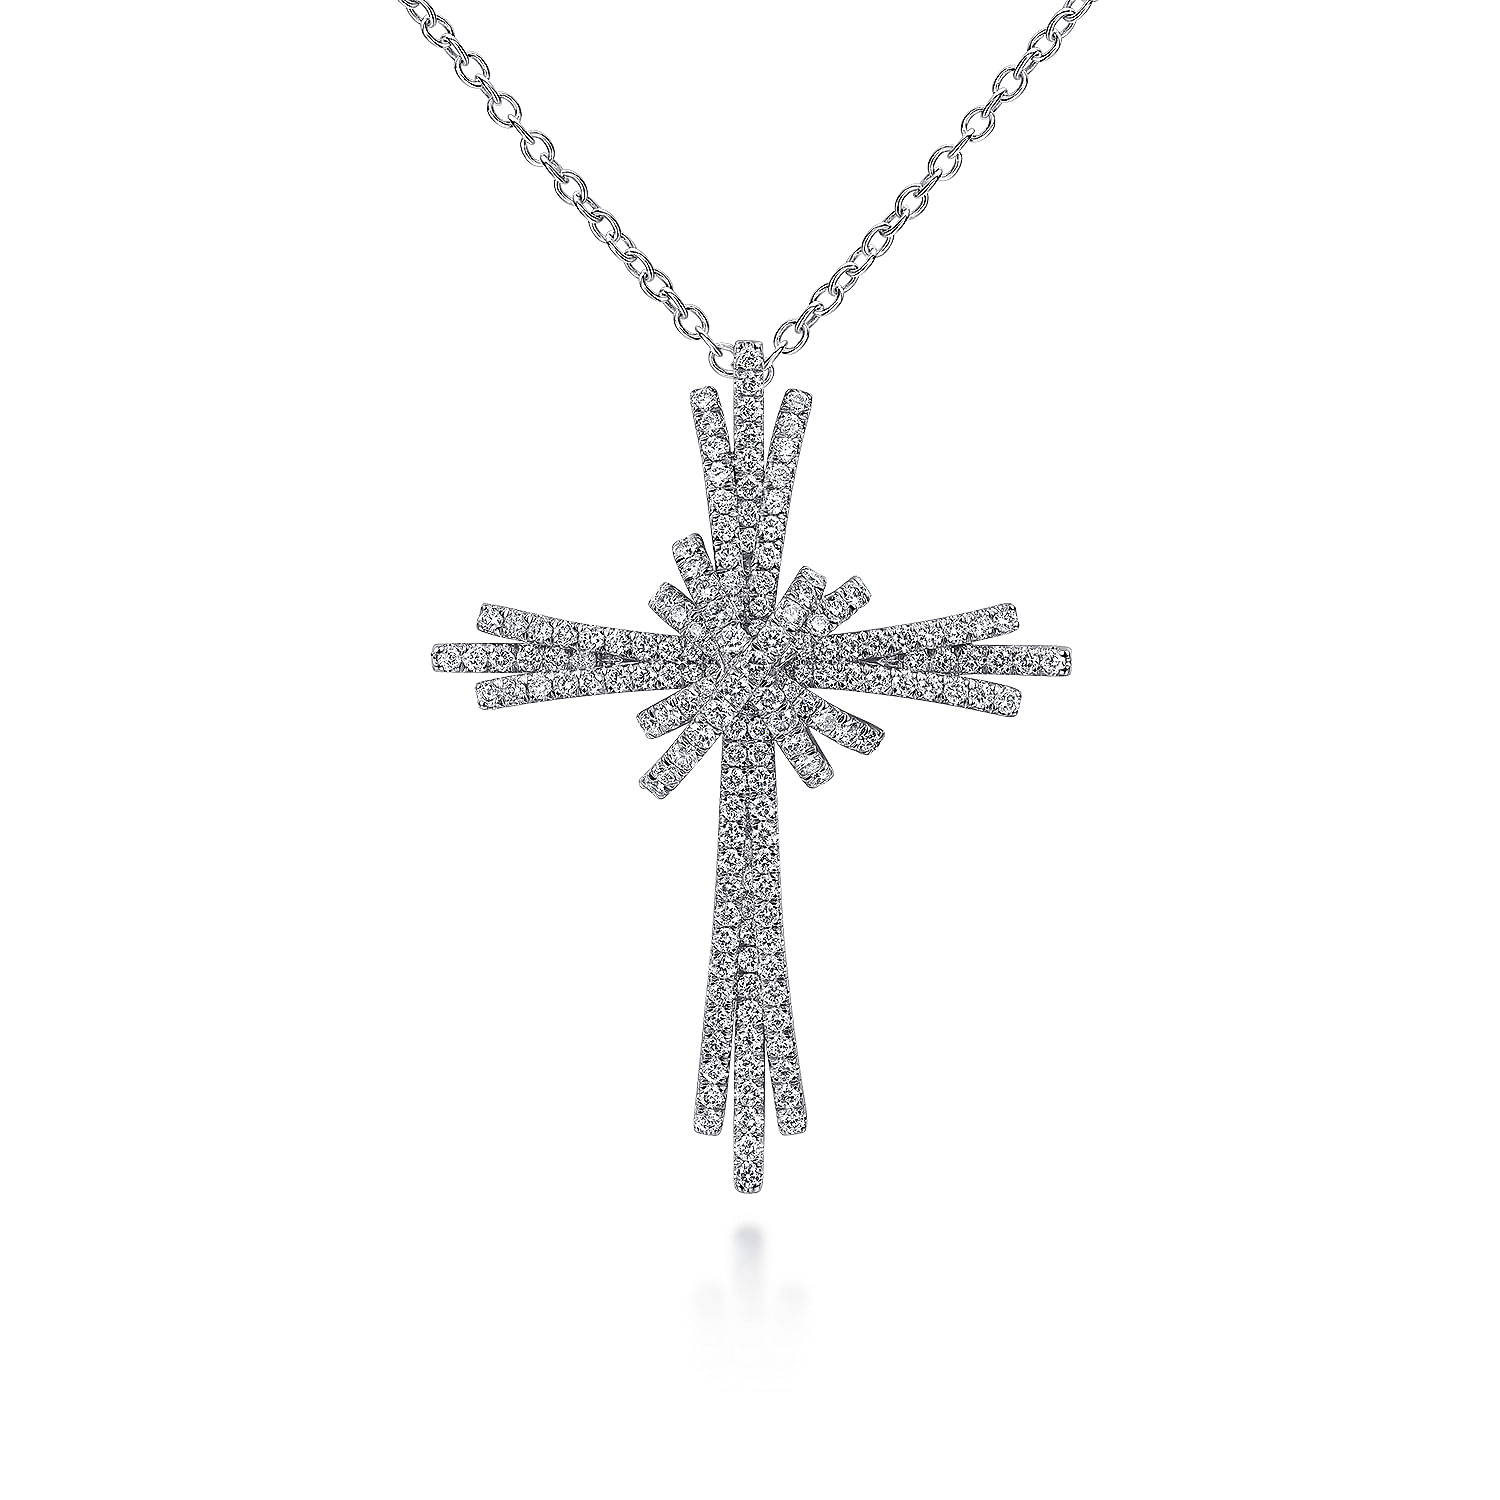 28 inch 14K White Gold Multi Row Diamond Pavé Cross Pendant Necklace